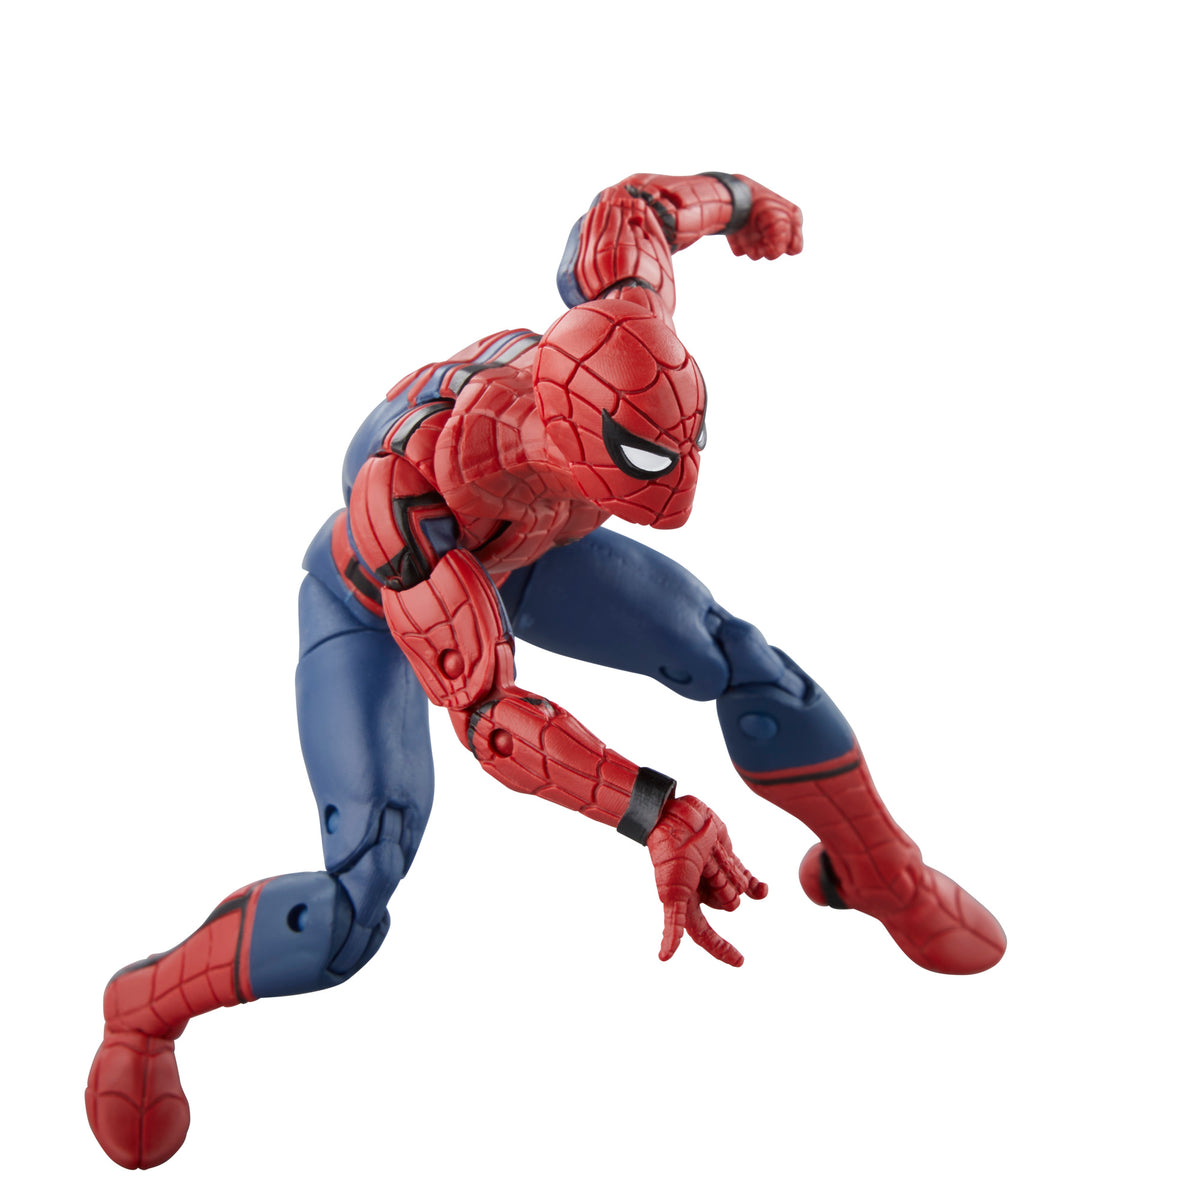 Spider-Man Action Figures in Action Figures 